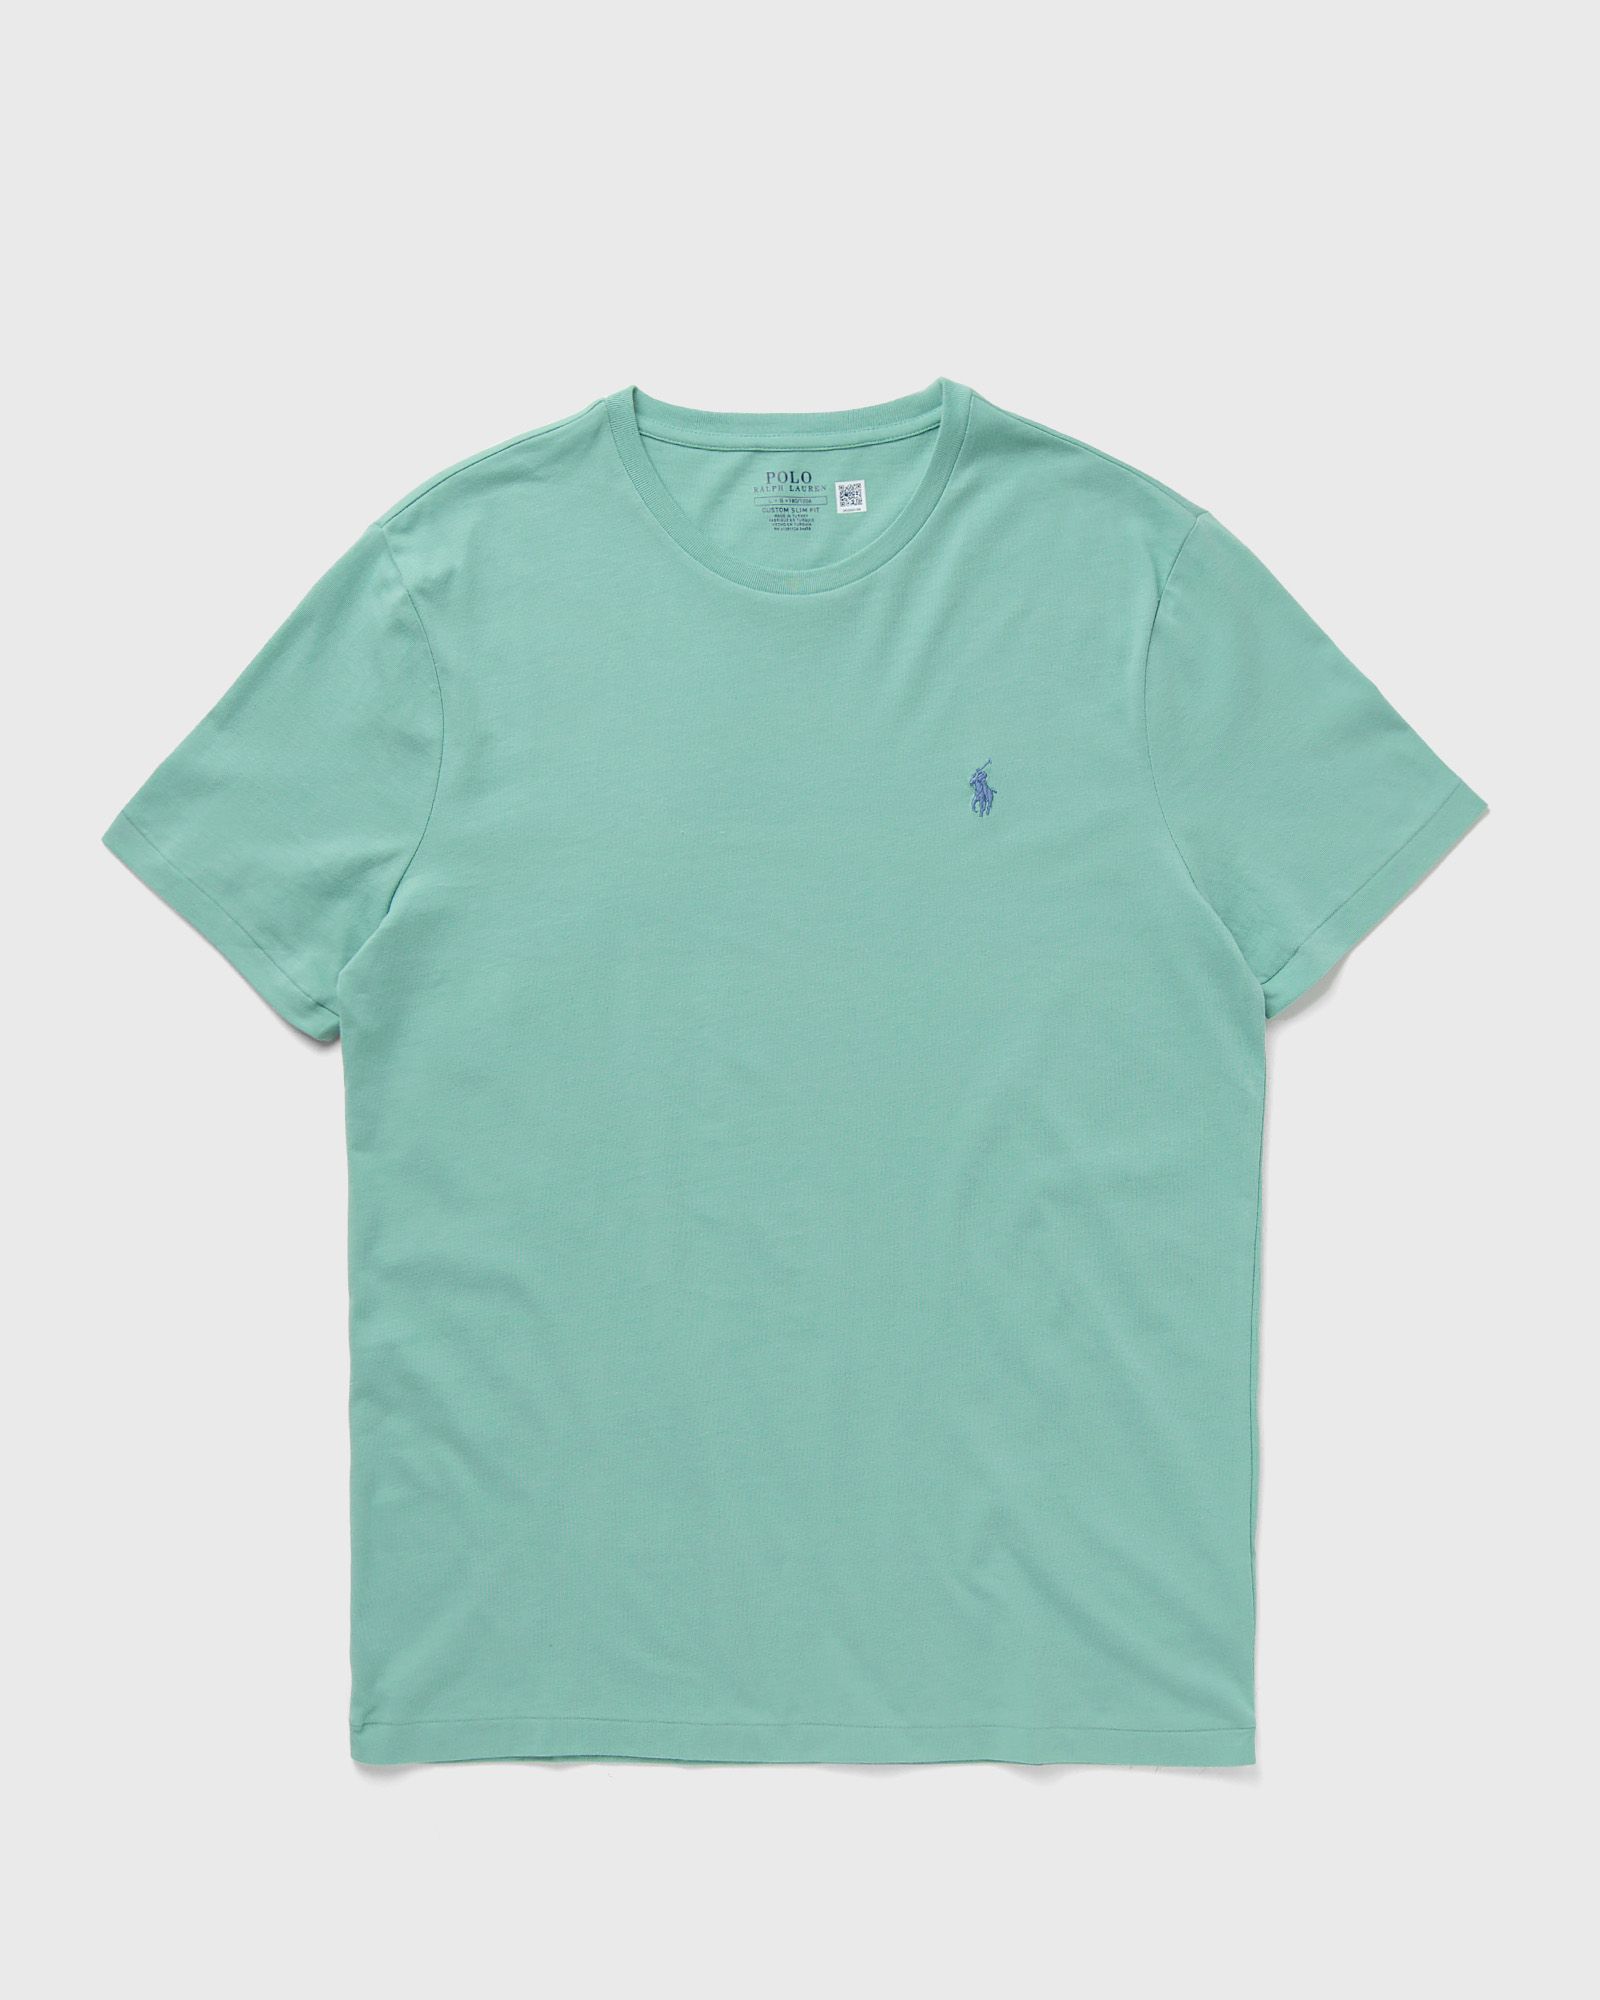 Polo Ralph Lauren - short sleeve-tee men shortsleeves green in größe:xl